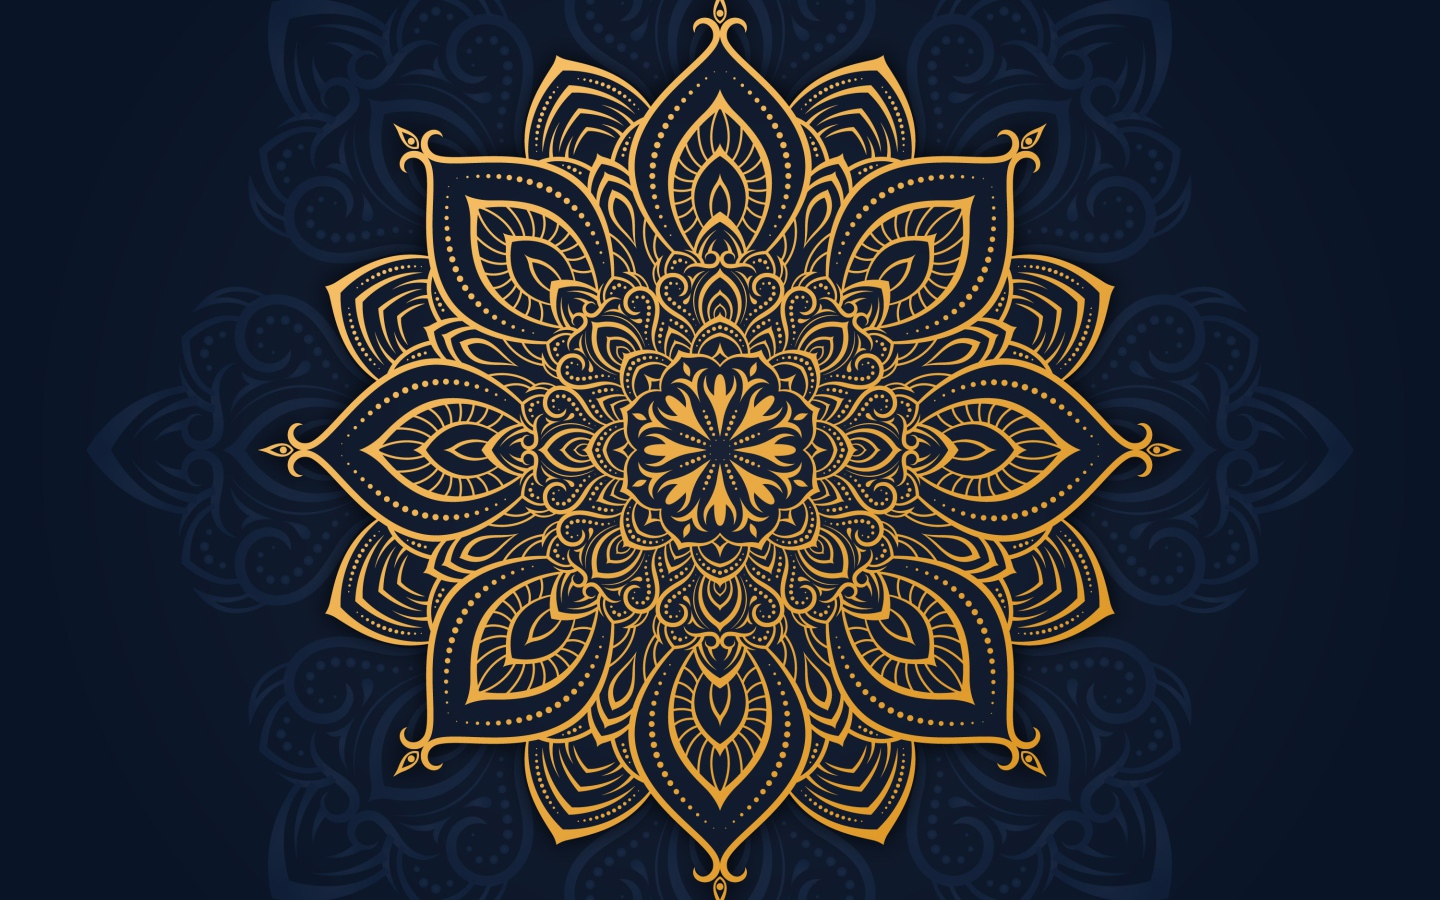 Beautiful golden pattern on a blue background